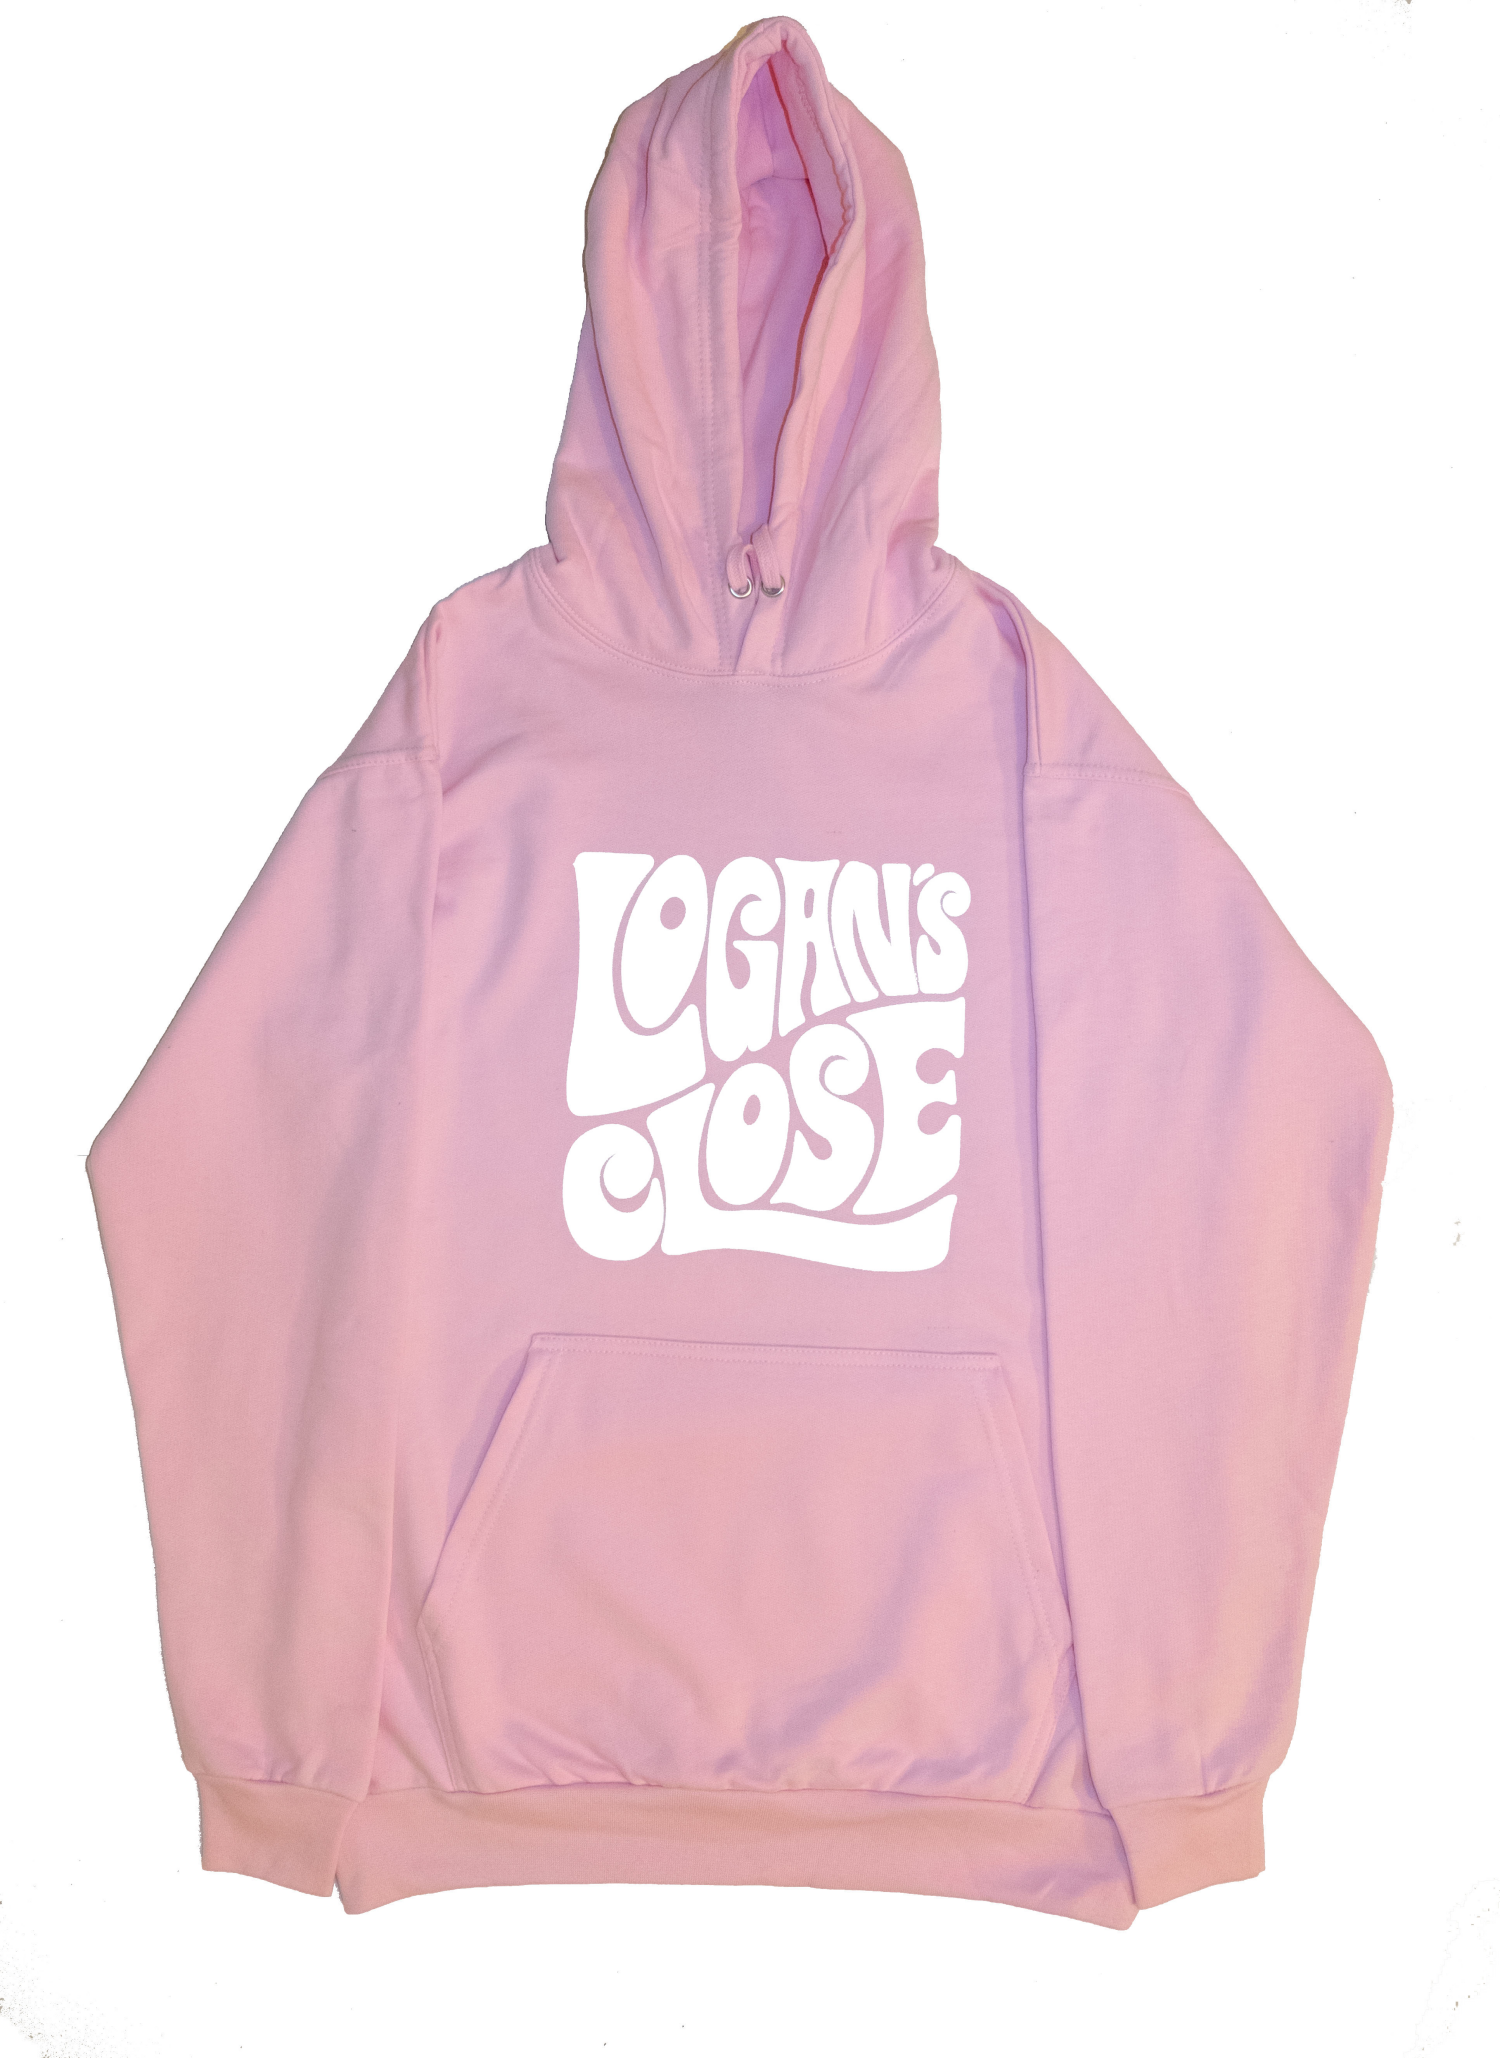 Pink hoodie with Logan's Close logo.